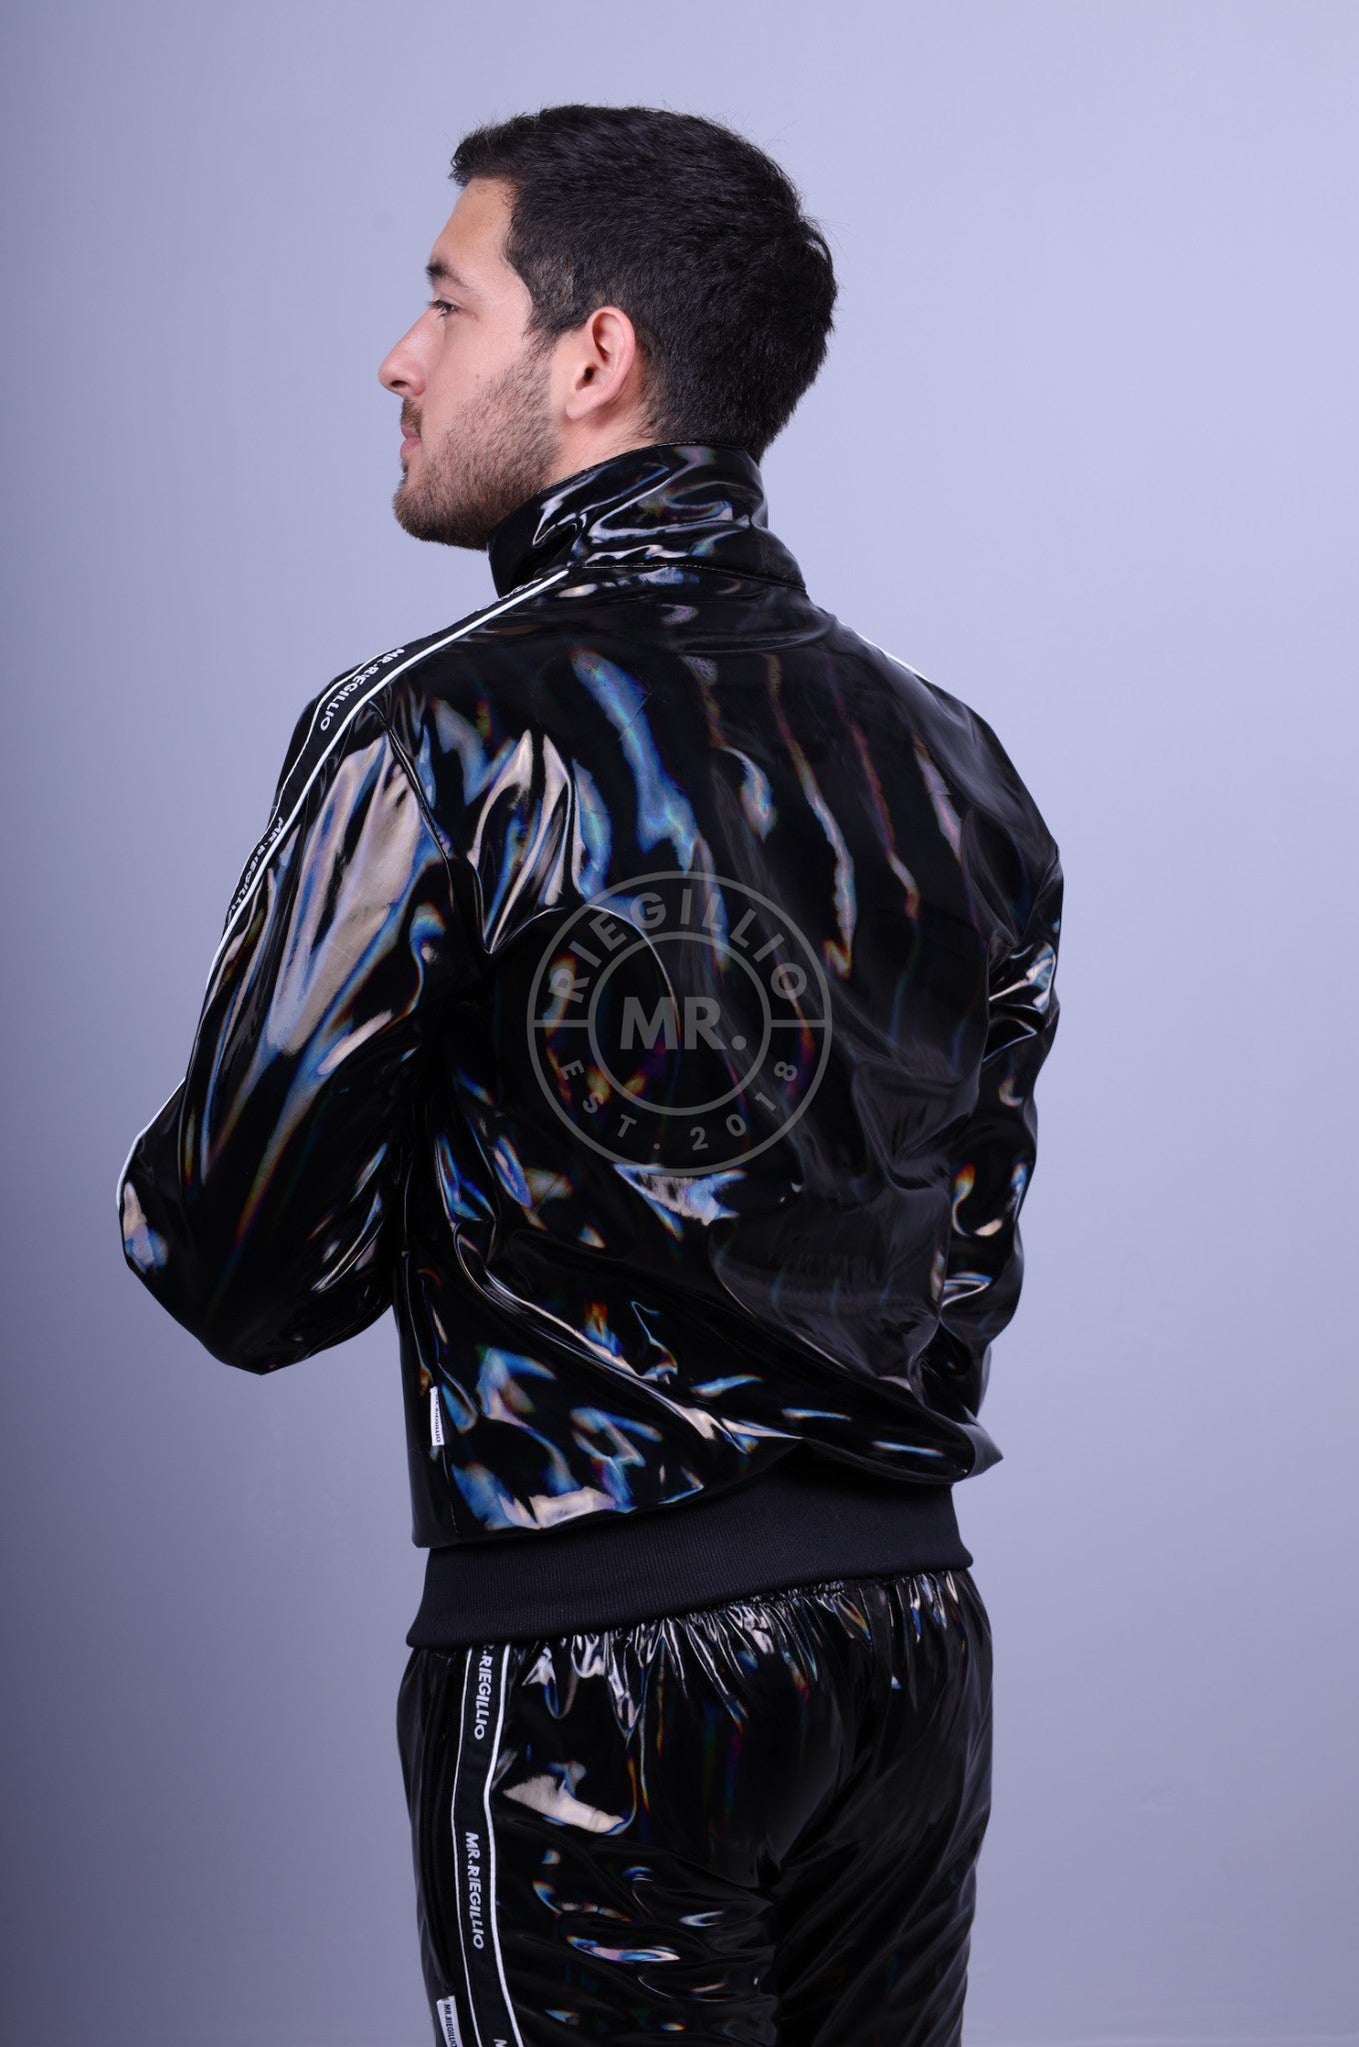 Black Holographic Tracksuit Jacket at MR. Riegillio